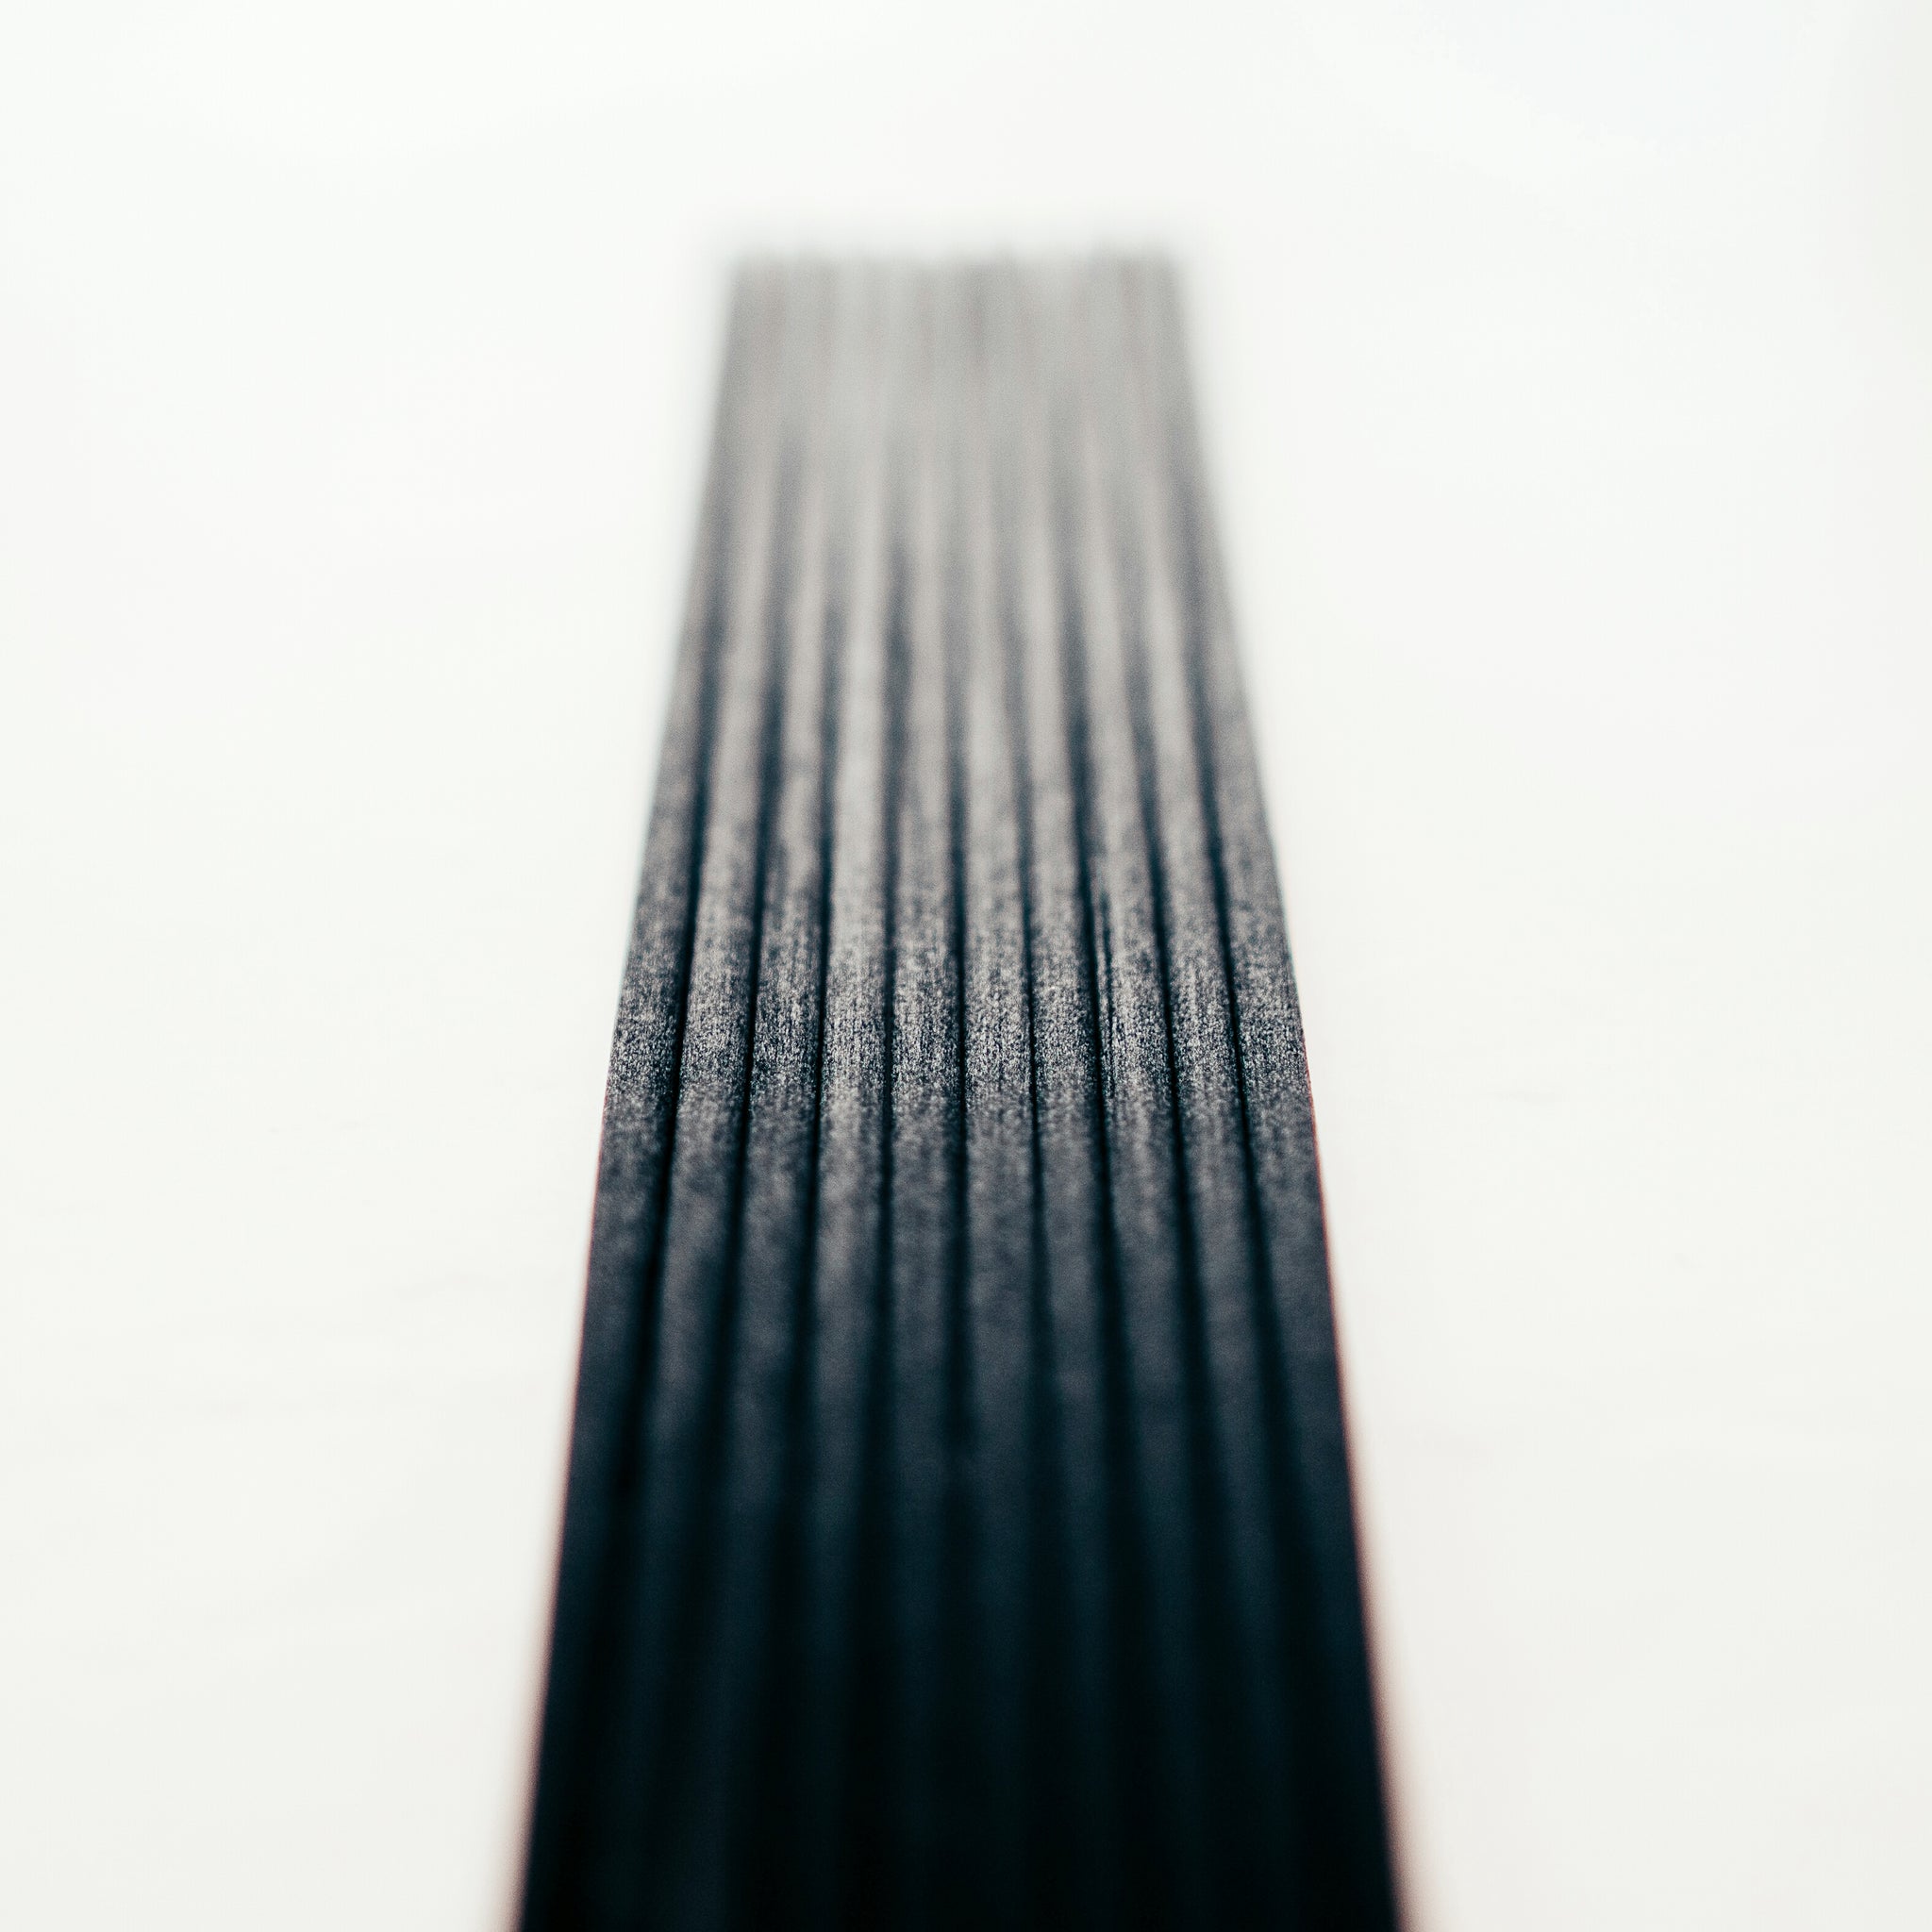 Reed Diffuser Sticks (Black)